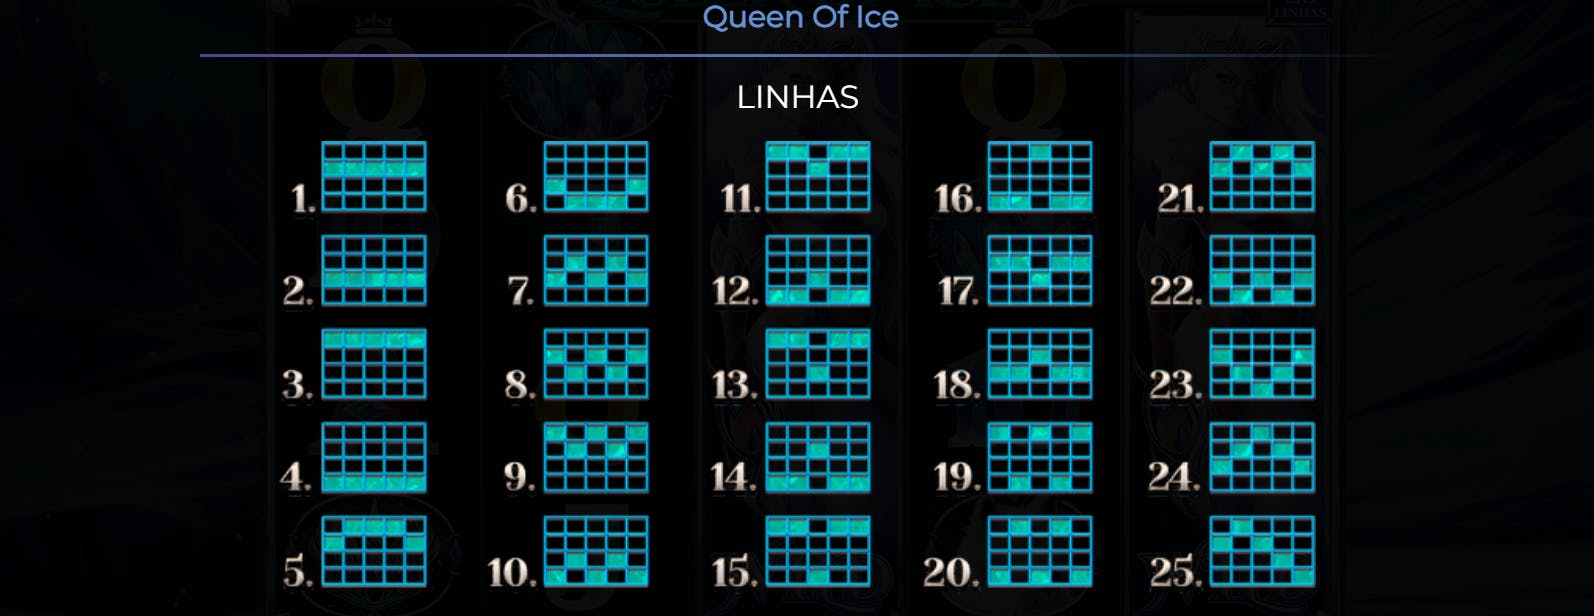 25 linhas fixas slot Queen of ice